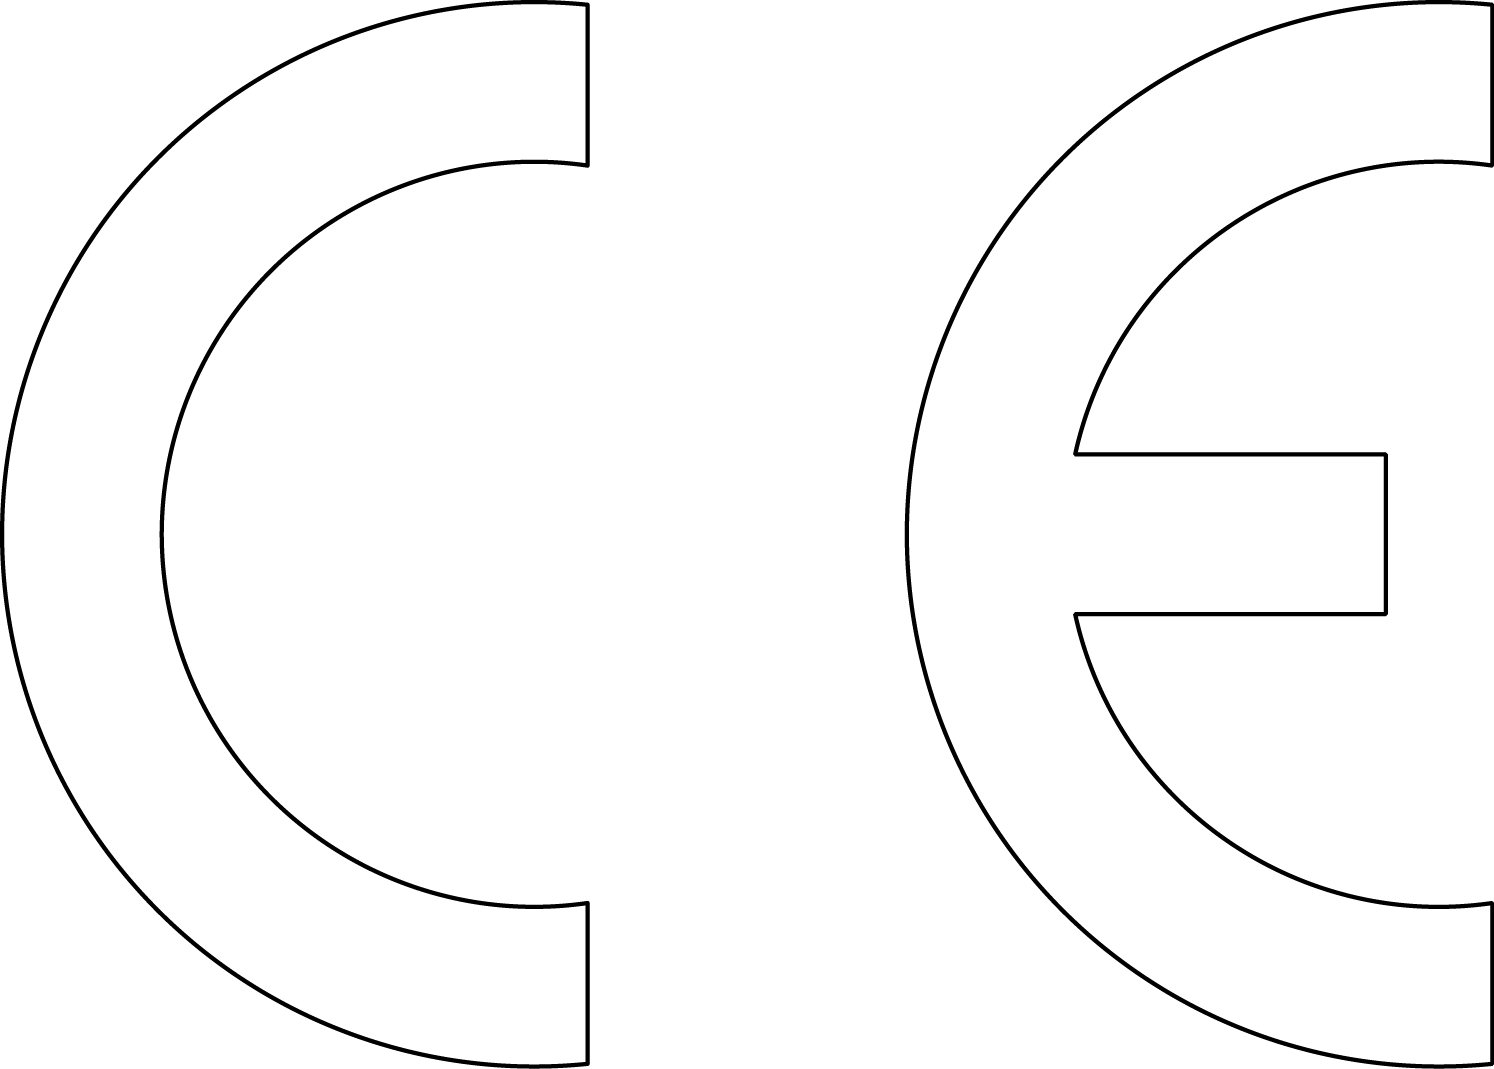 ce logo | Logospike.com: Famous and Free Vector Logos